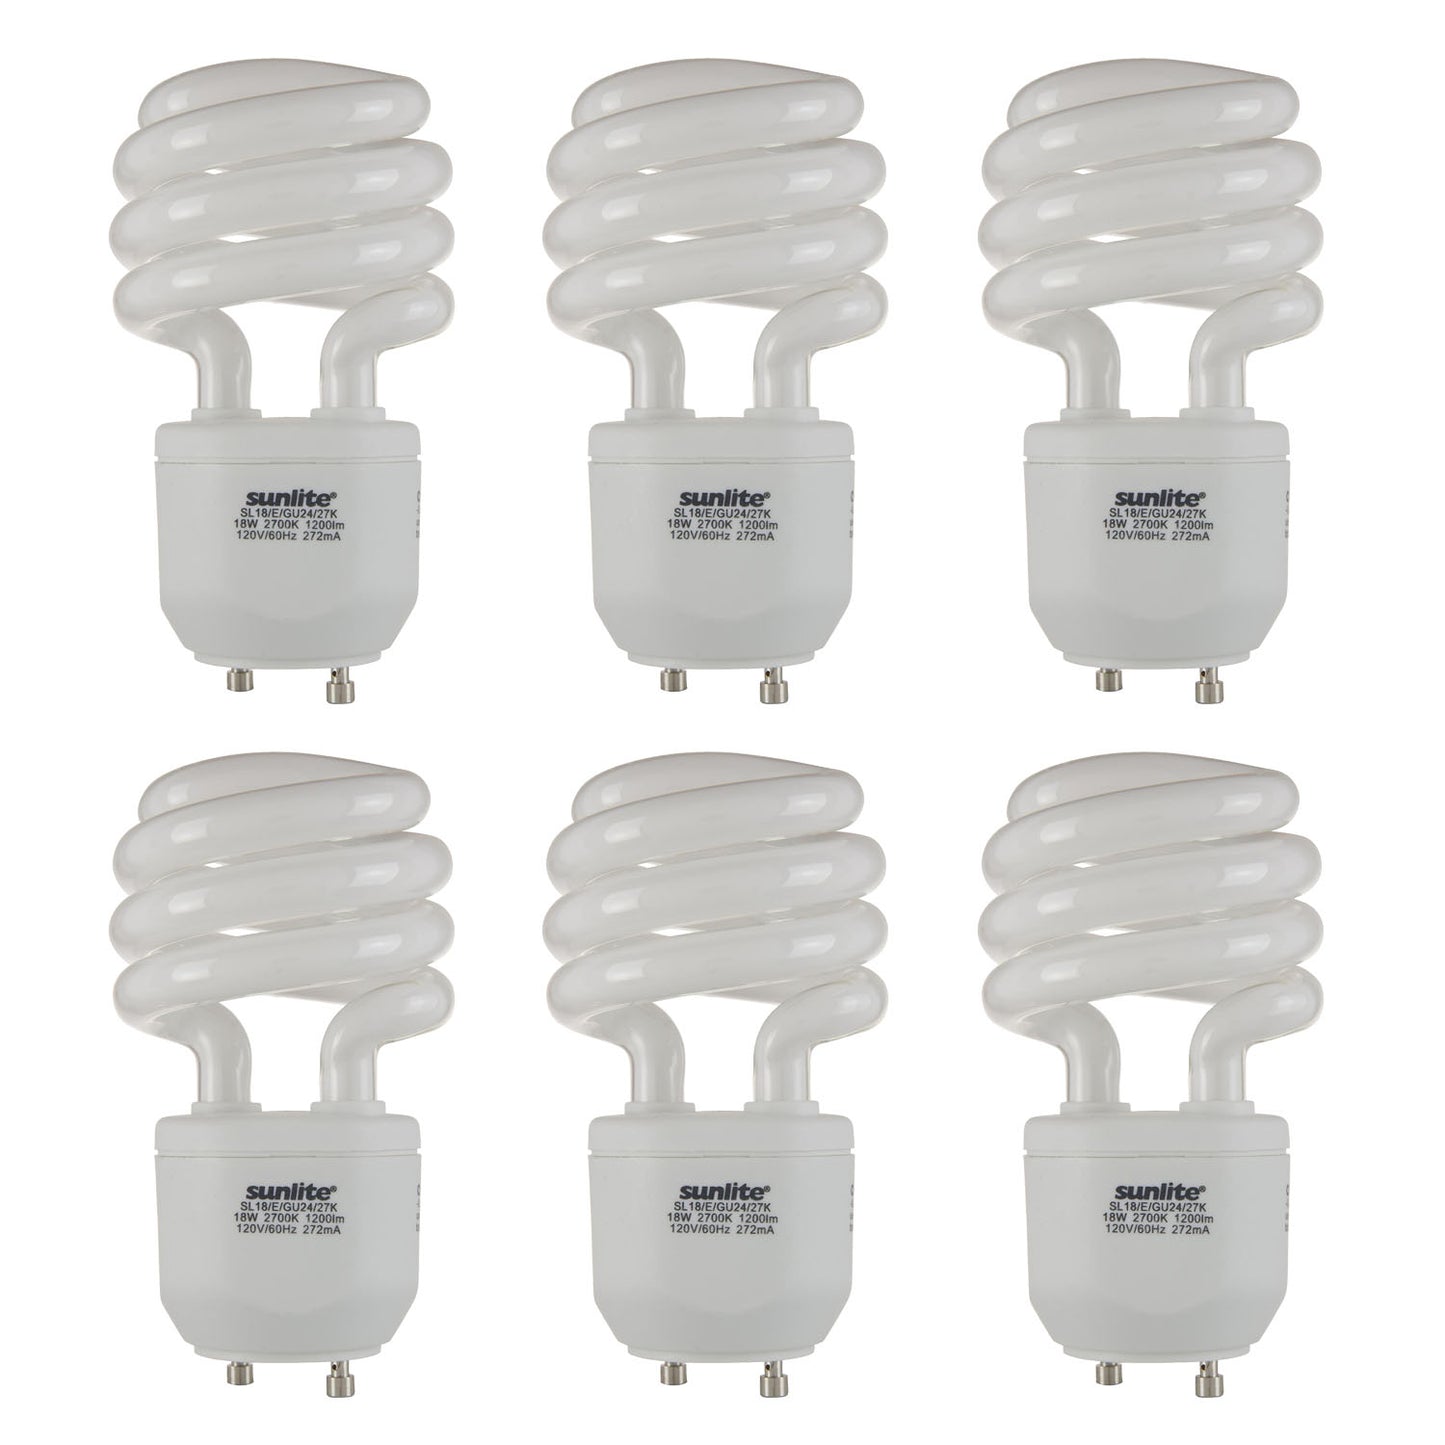 Sunlite Compact Fluorescent T2 Spiral, Standard Household Energy Saving CFL Light Bulb, 18 Watt, GU24 Base, 27K - Warm White, 6 Pack